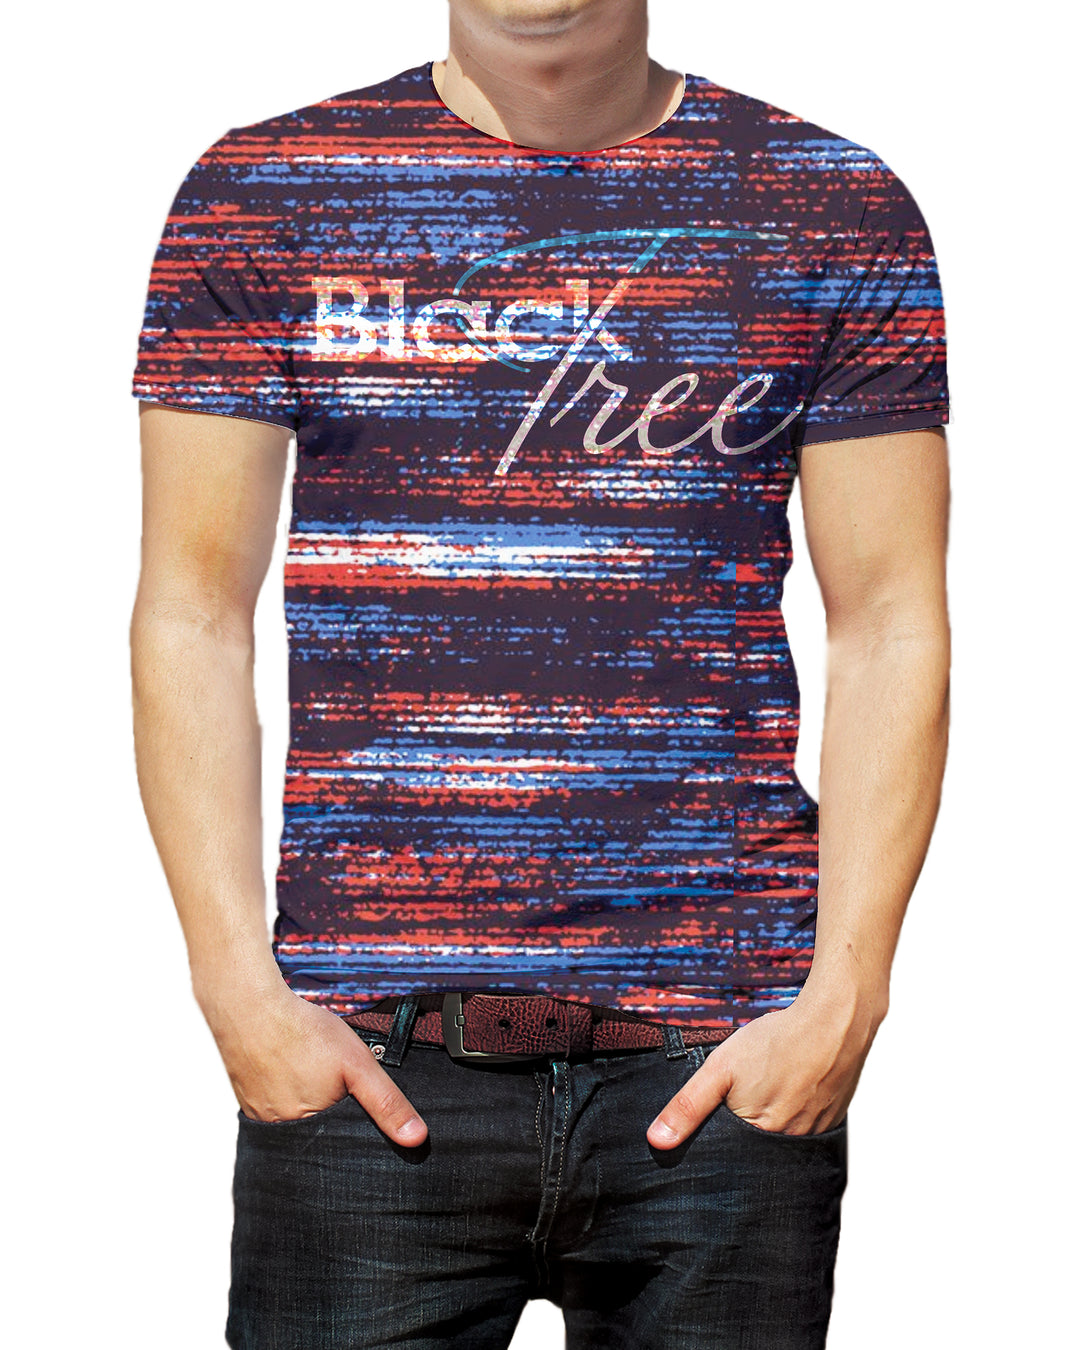 BlackTree Casual Cool T-shirt-BT255.